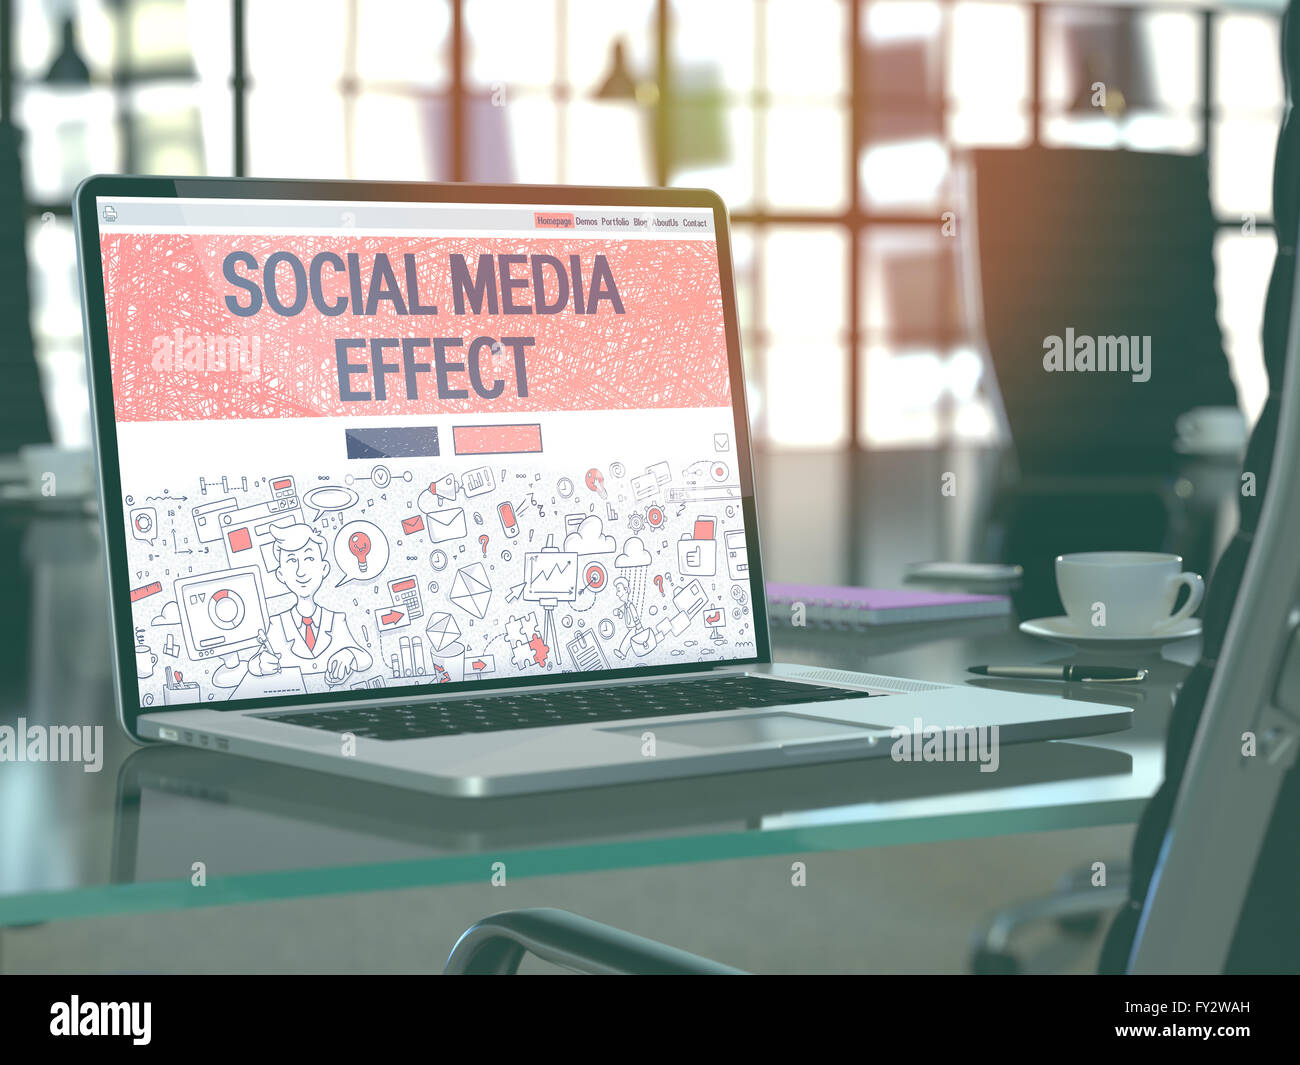 Social Media Effect Concept on Laptop Screen. Stock Photo